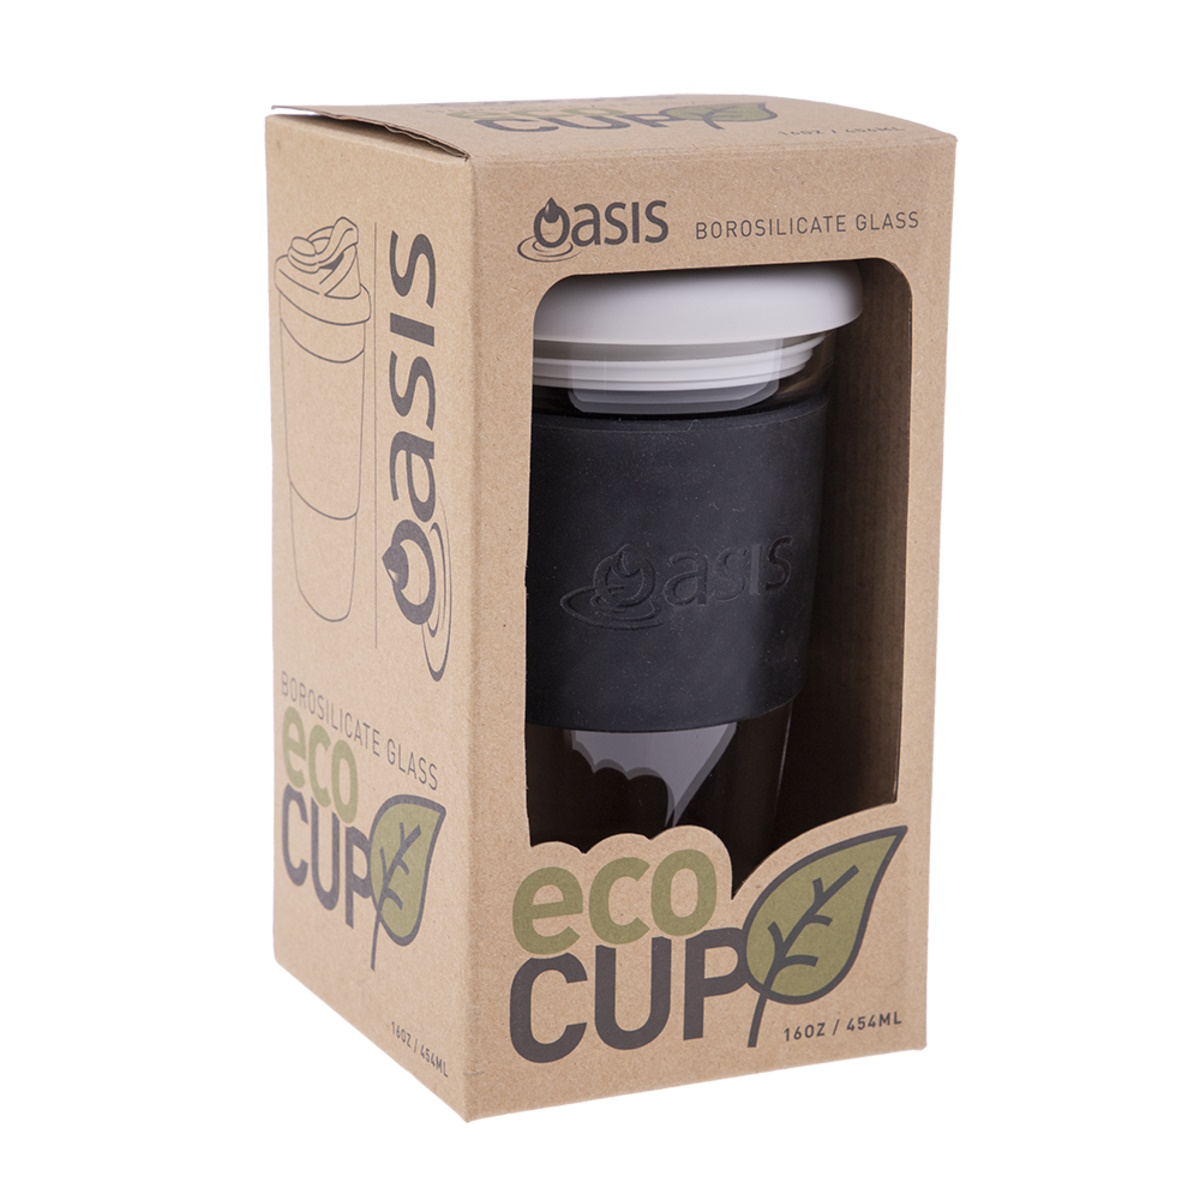 Oasis Borosilicate Glass Eco Cup 16oz-454ml Black